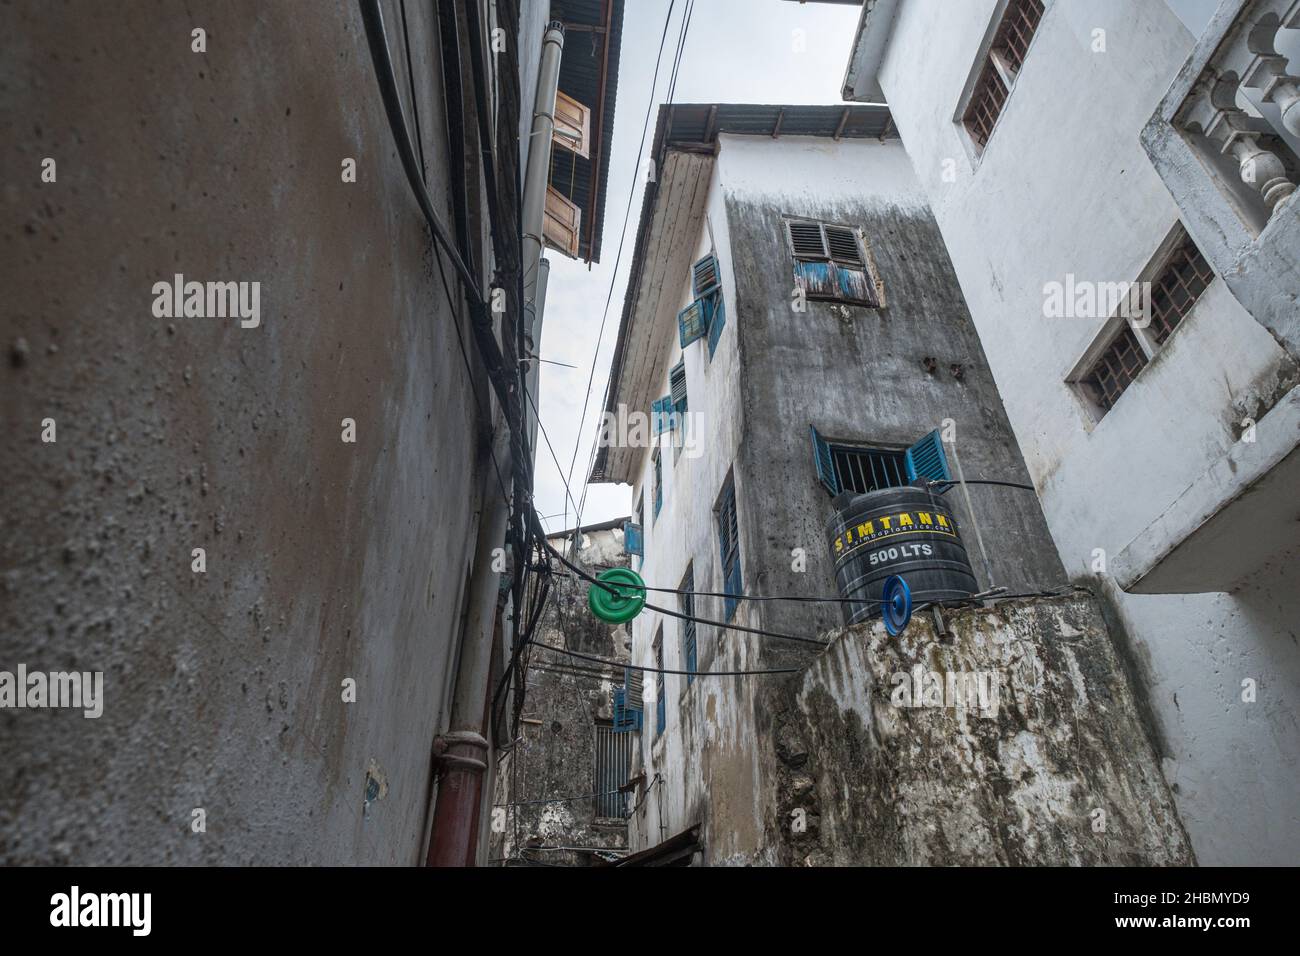 STONE TOWN, ZANZIBAR, TANZANIA - MARCH 13, 2017: Water storage amidst historic dwellings in the heart of downtown Stone Town, Zanzibar, Tanzania Stock Photo